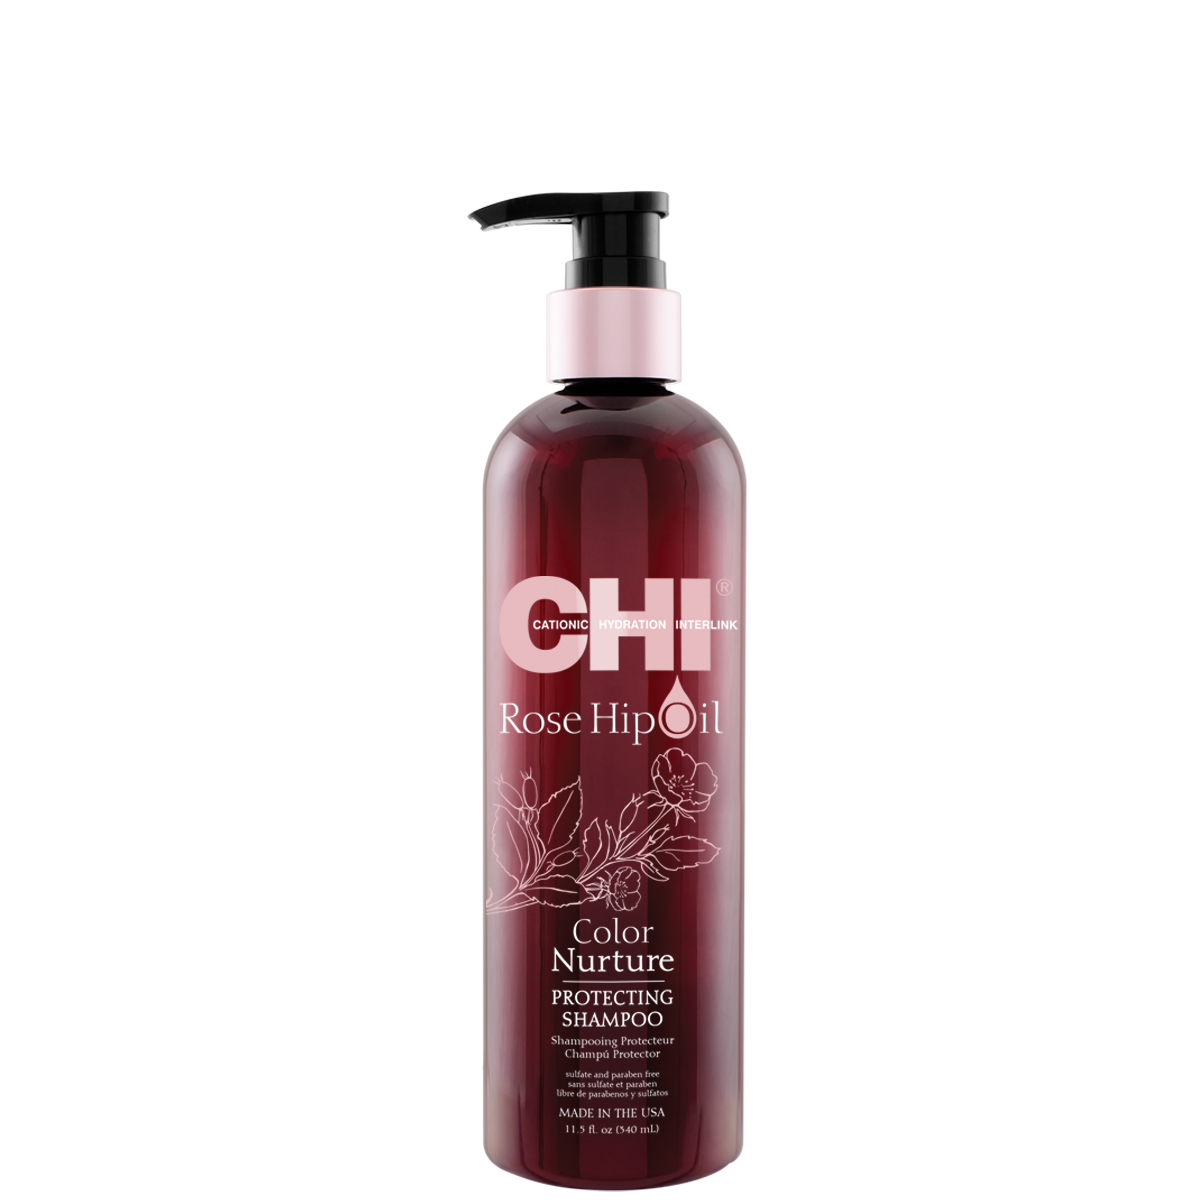 CHI Rosehip Oil Color Nurture Protecting Shampoo